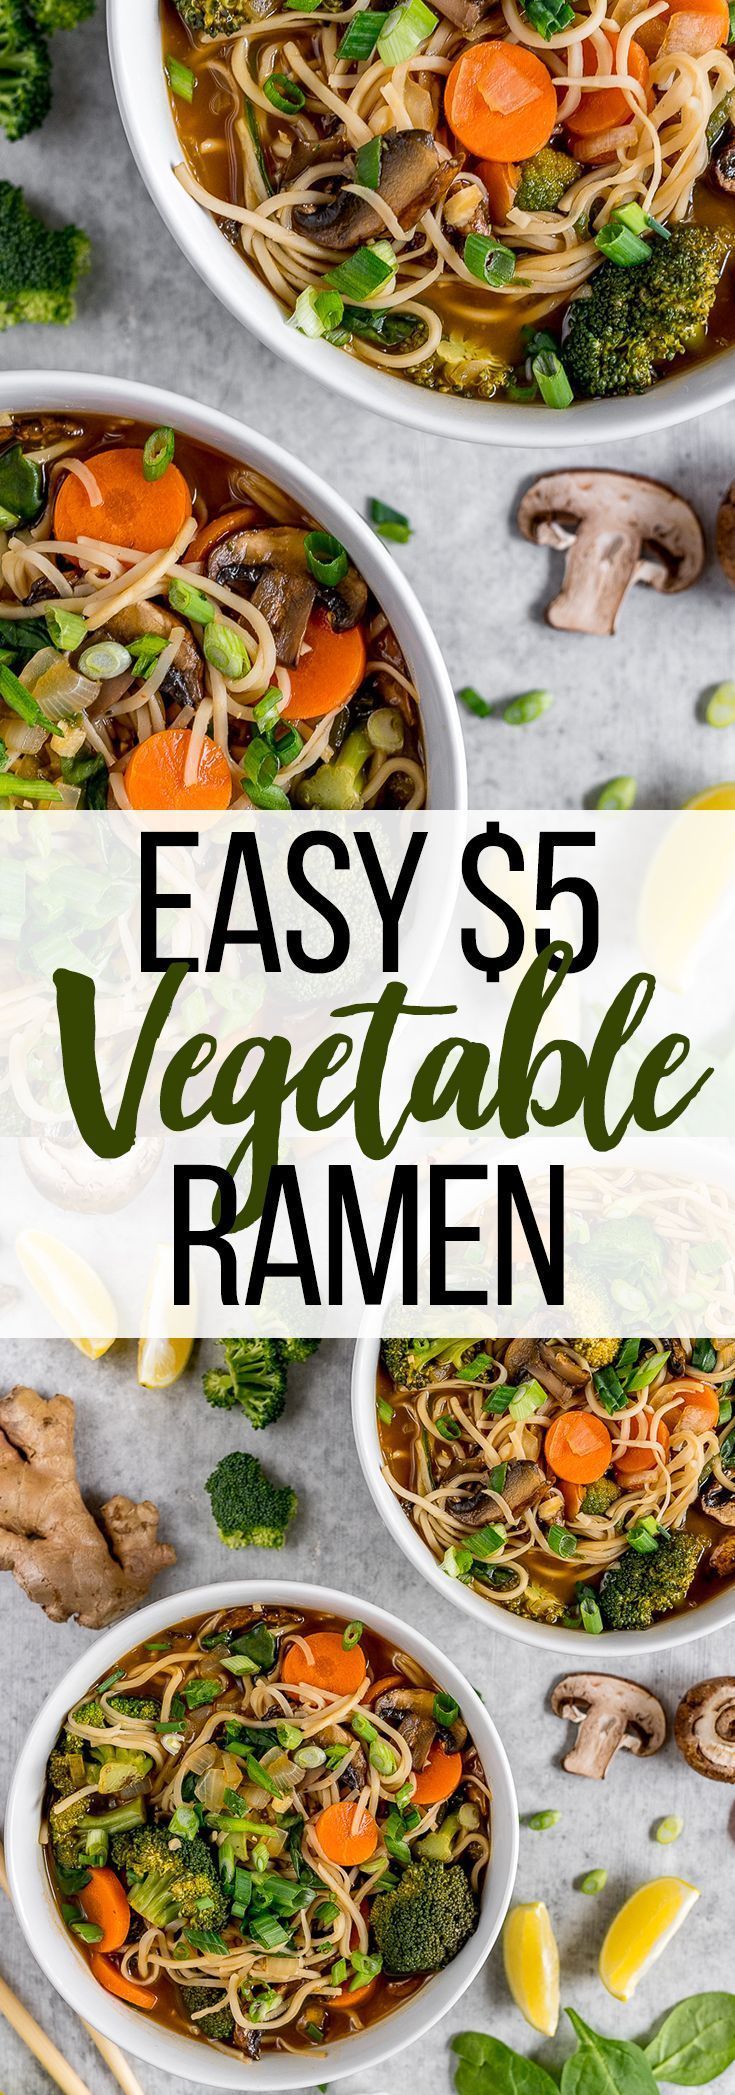 Easy $5 Vegetable Ramen (Oil-free) -   14 healthy recipes Quick oil ideas